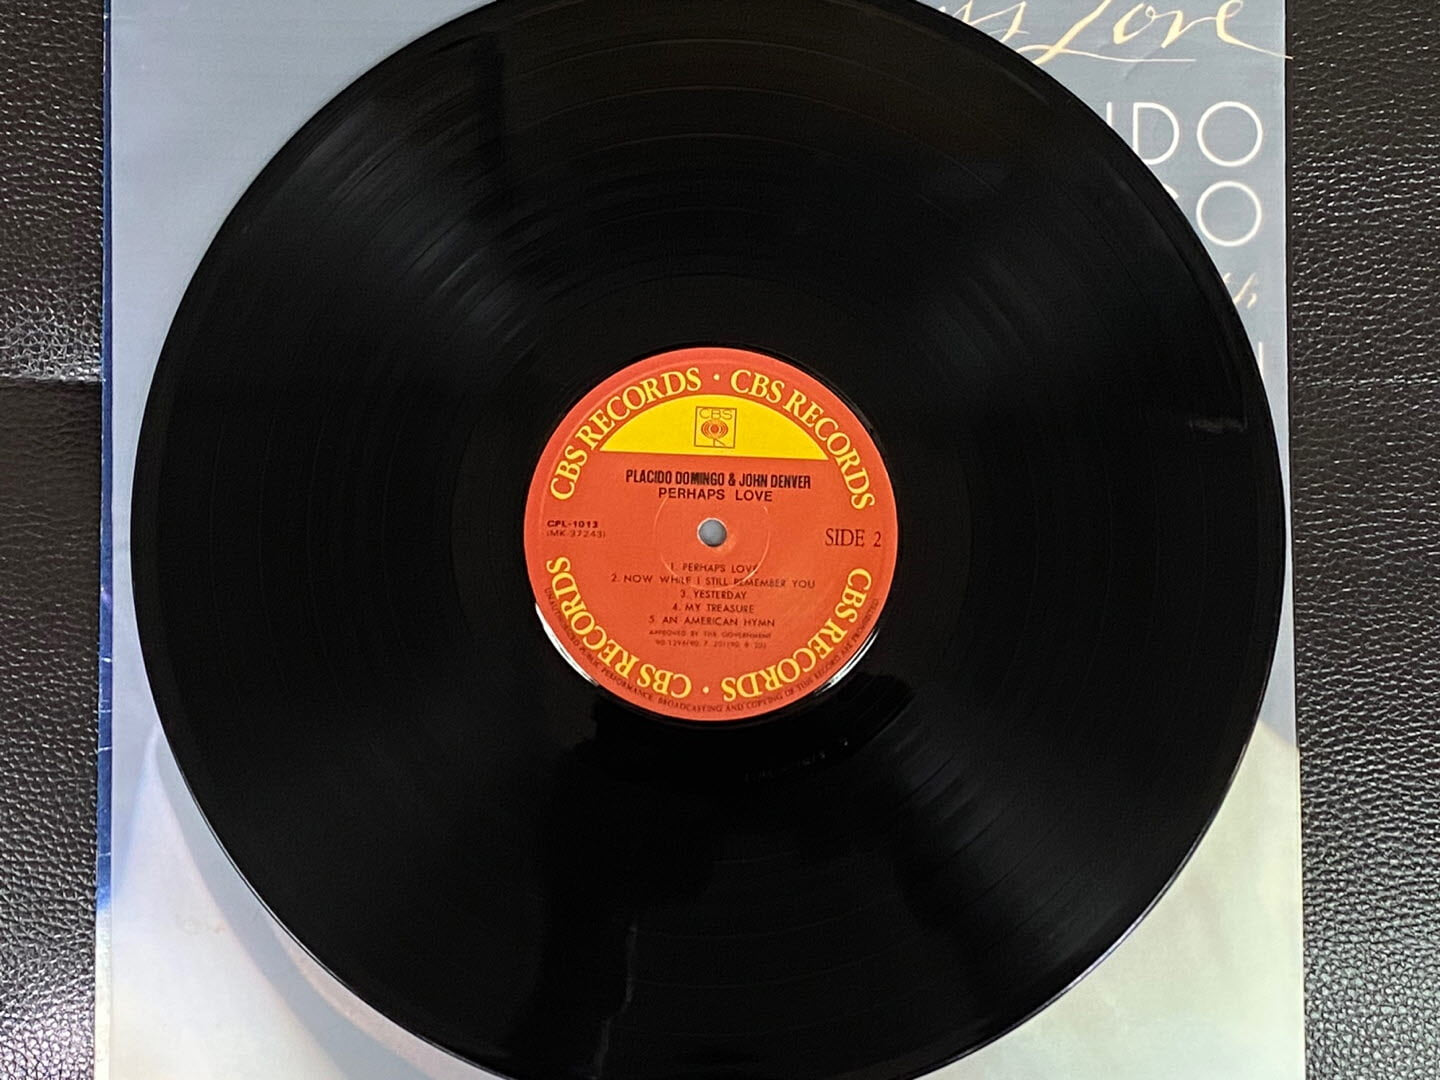 [LP] 플라시도 도밍고,존 덴버 - Placido Domingo,John Denver - Perhaps Love LP [CBS-라이센스반]